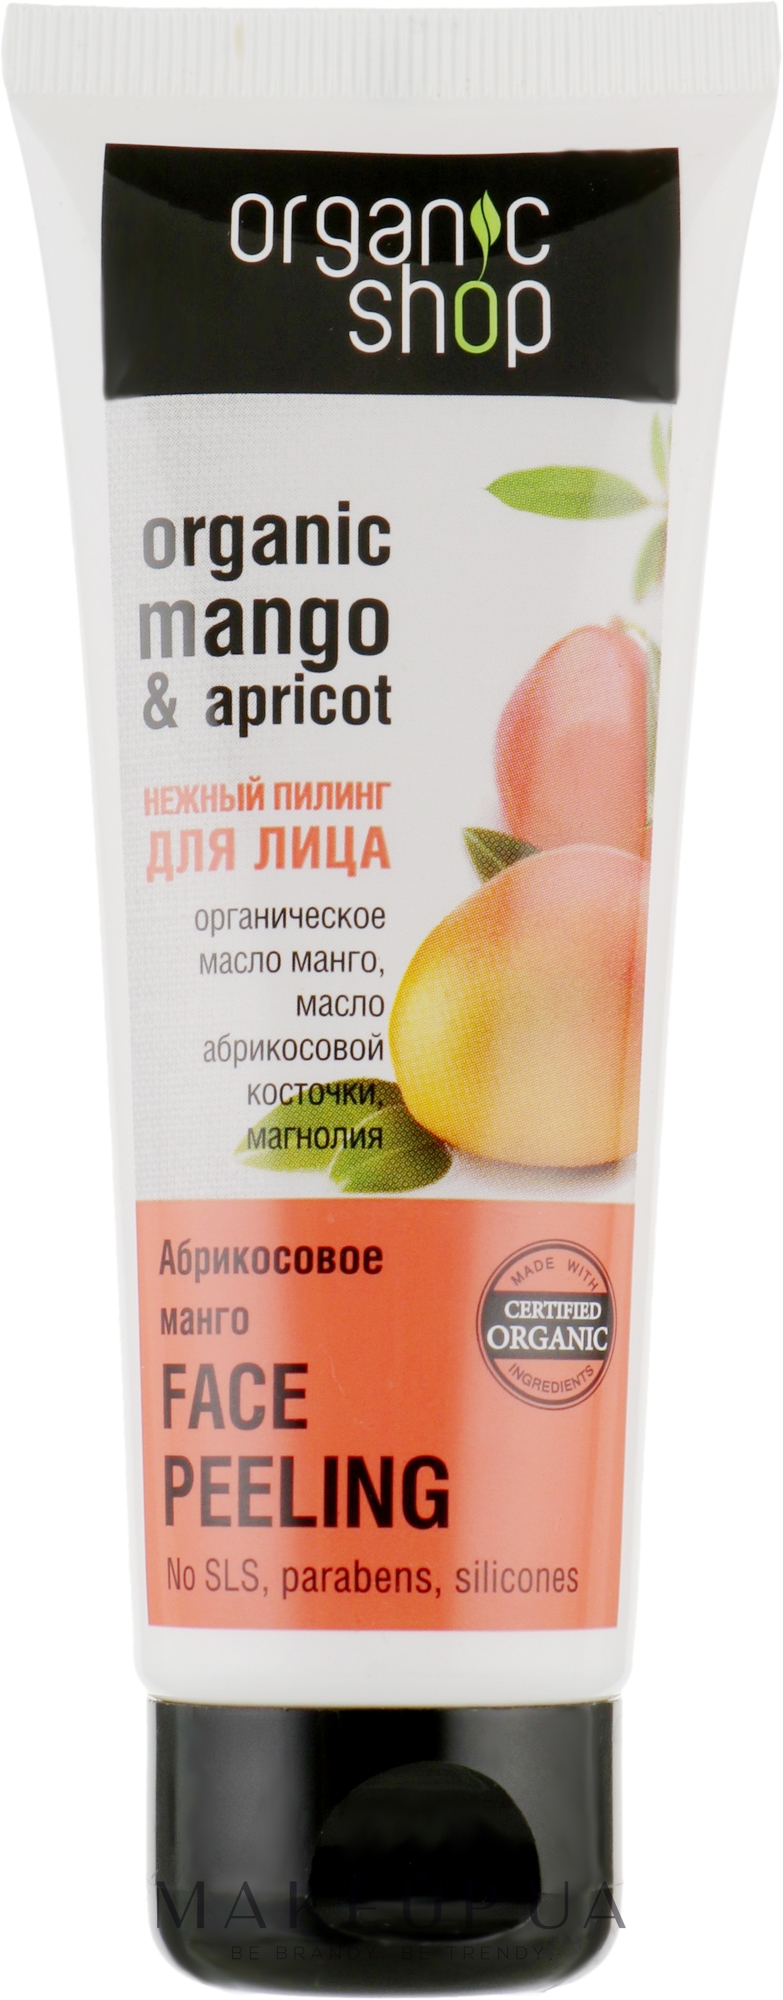 Манго натуральное сушеное без сахара 80 г